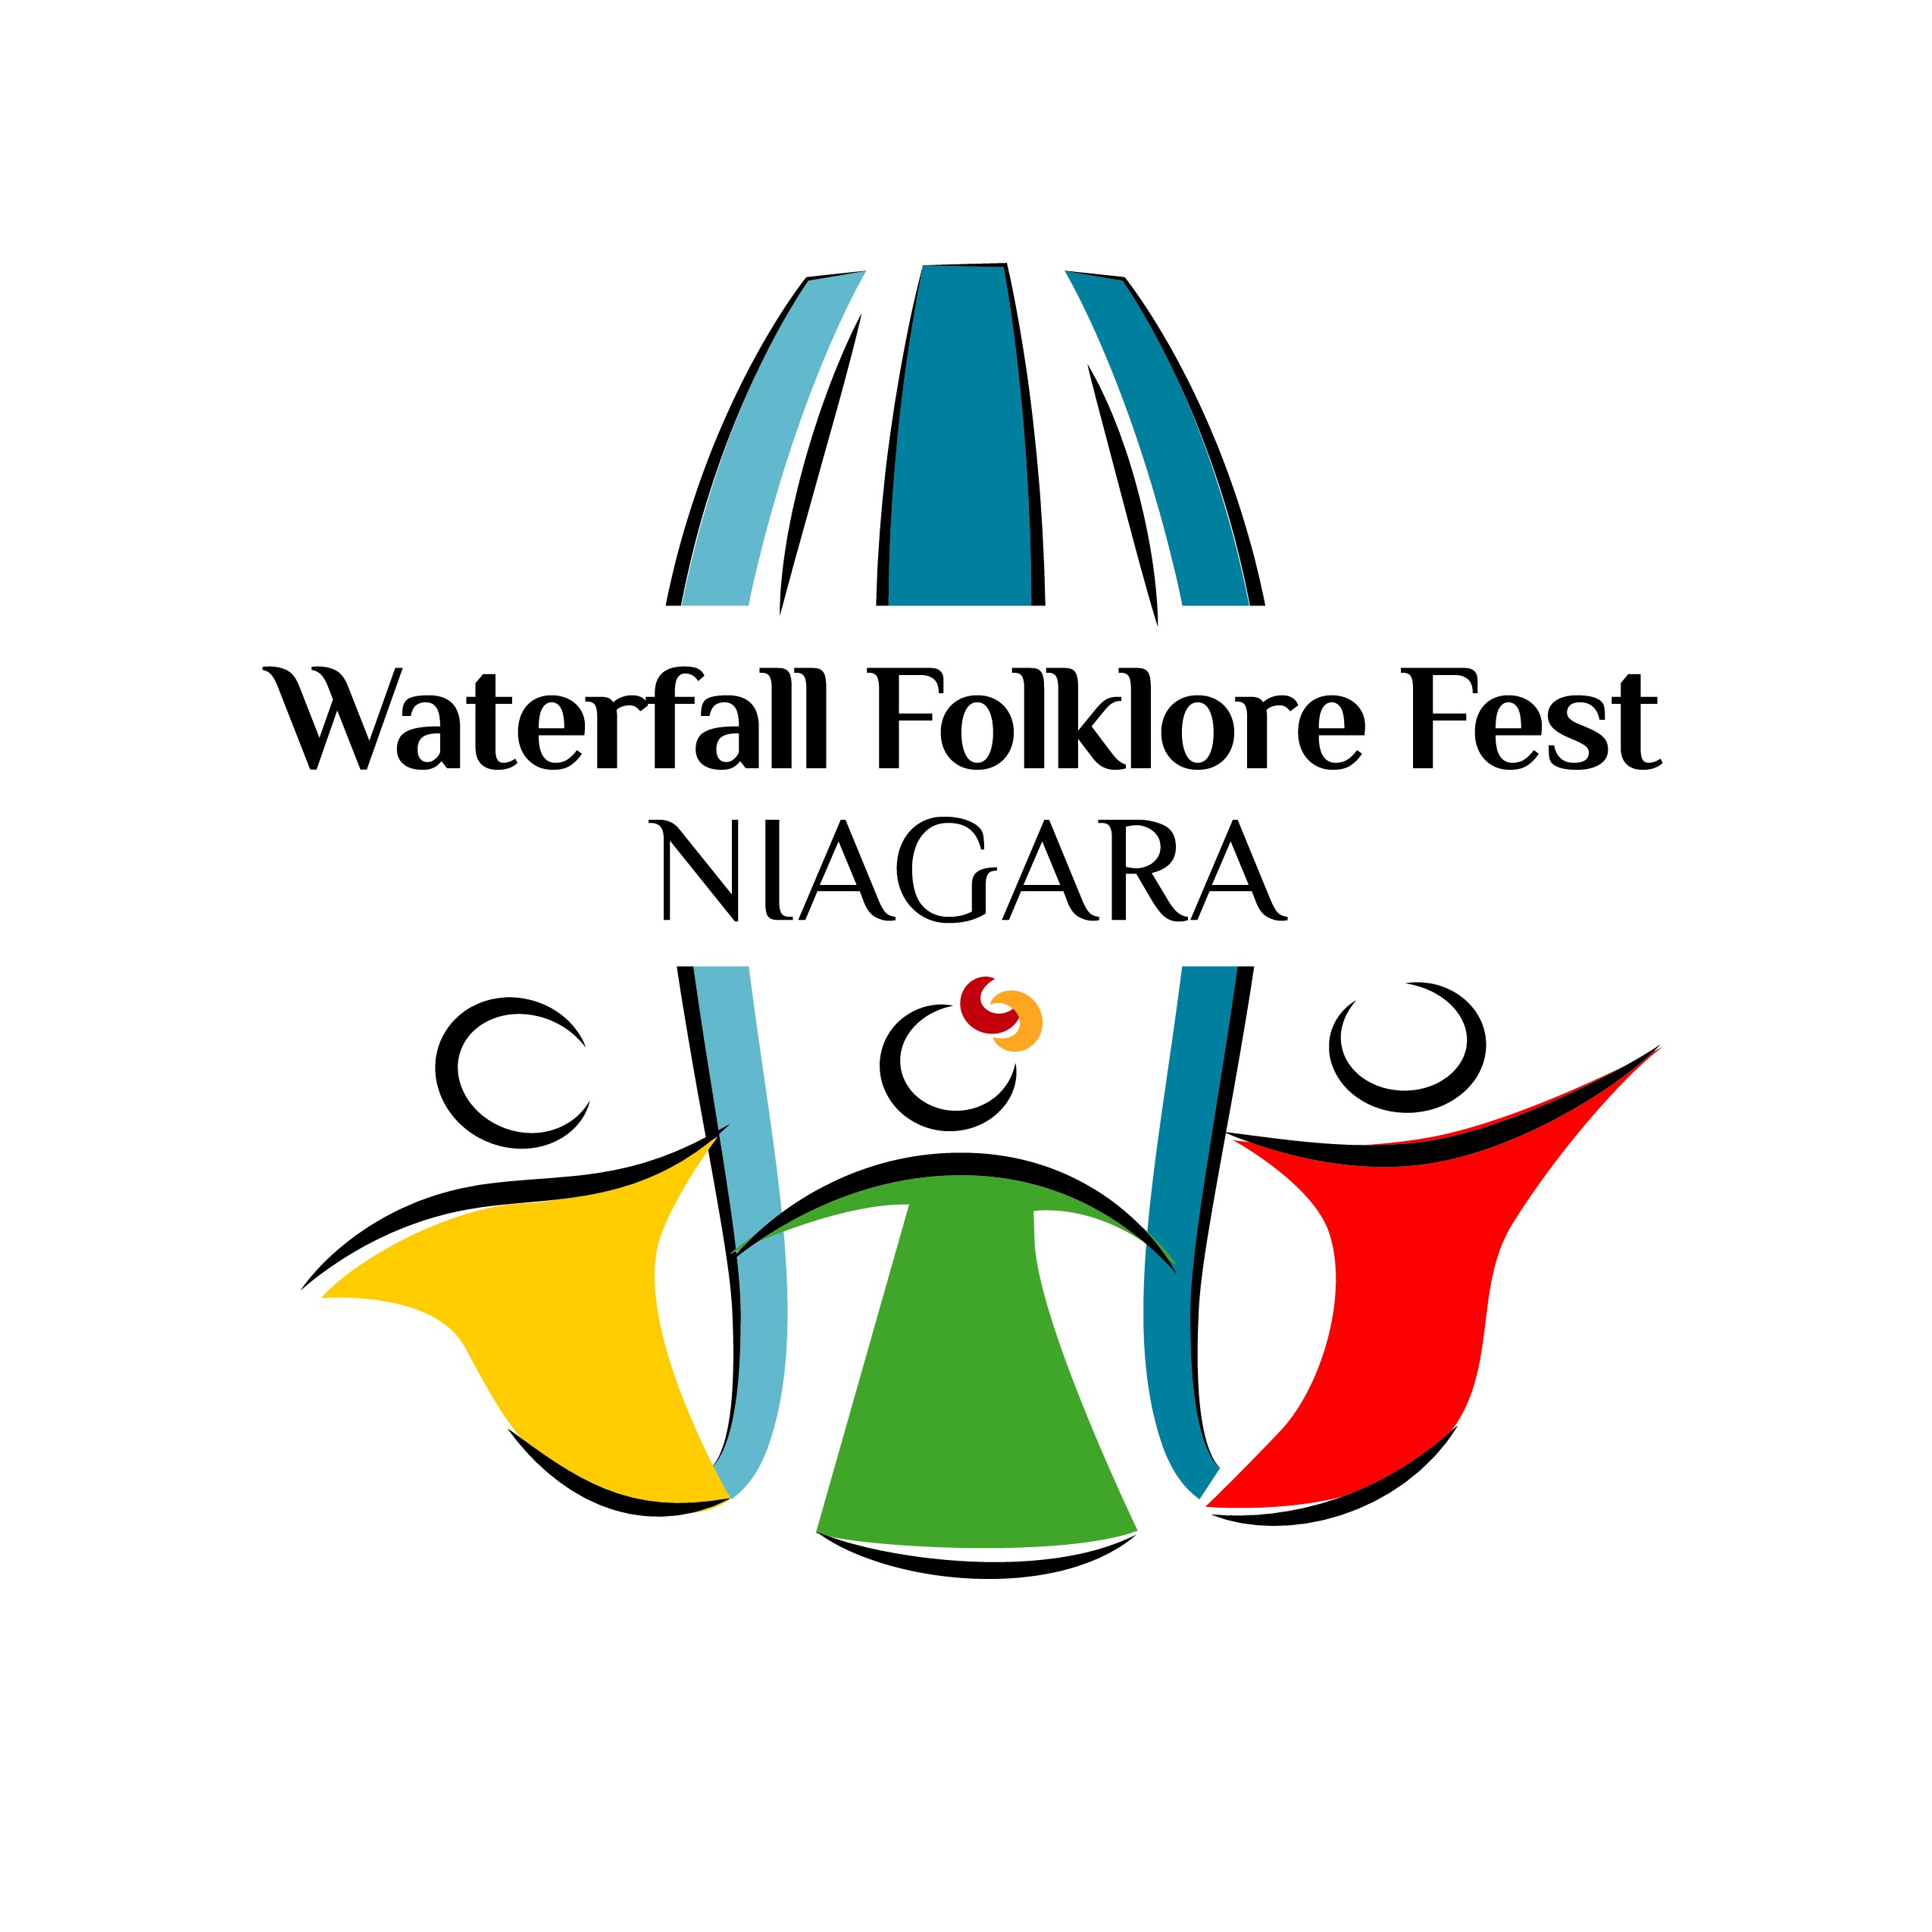 WATERFALL FOLKLORE FEST NIAGARA 